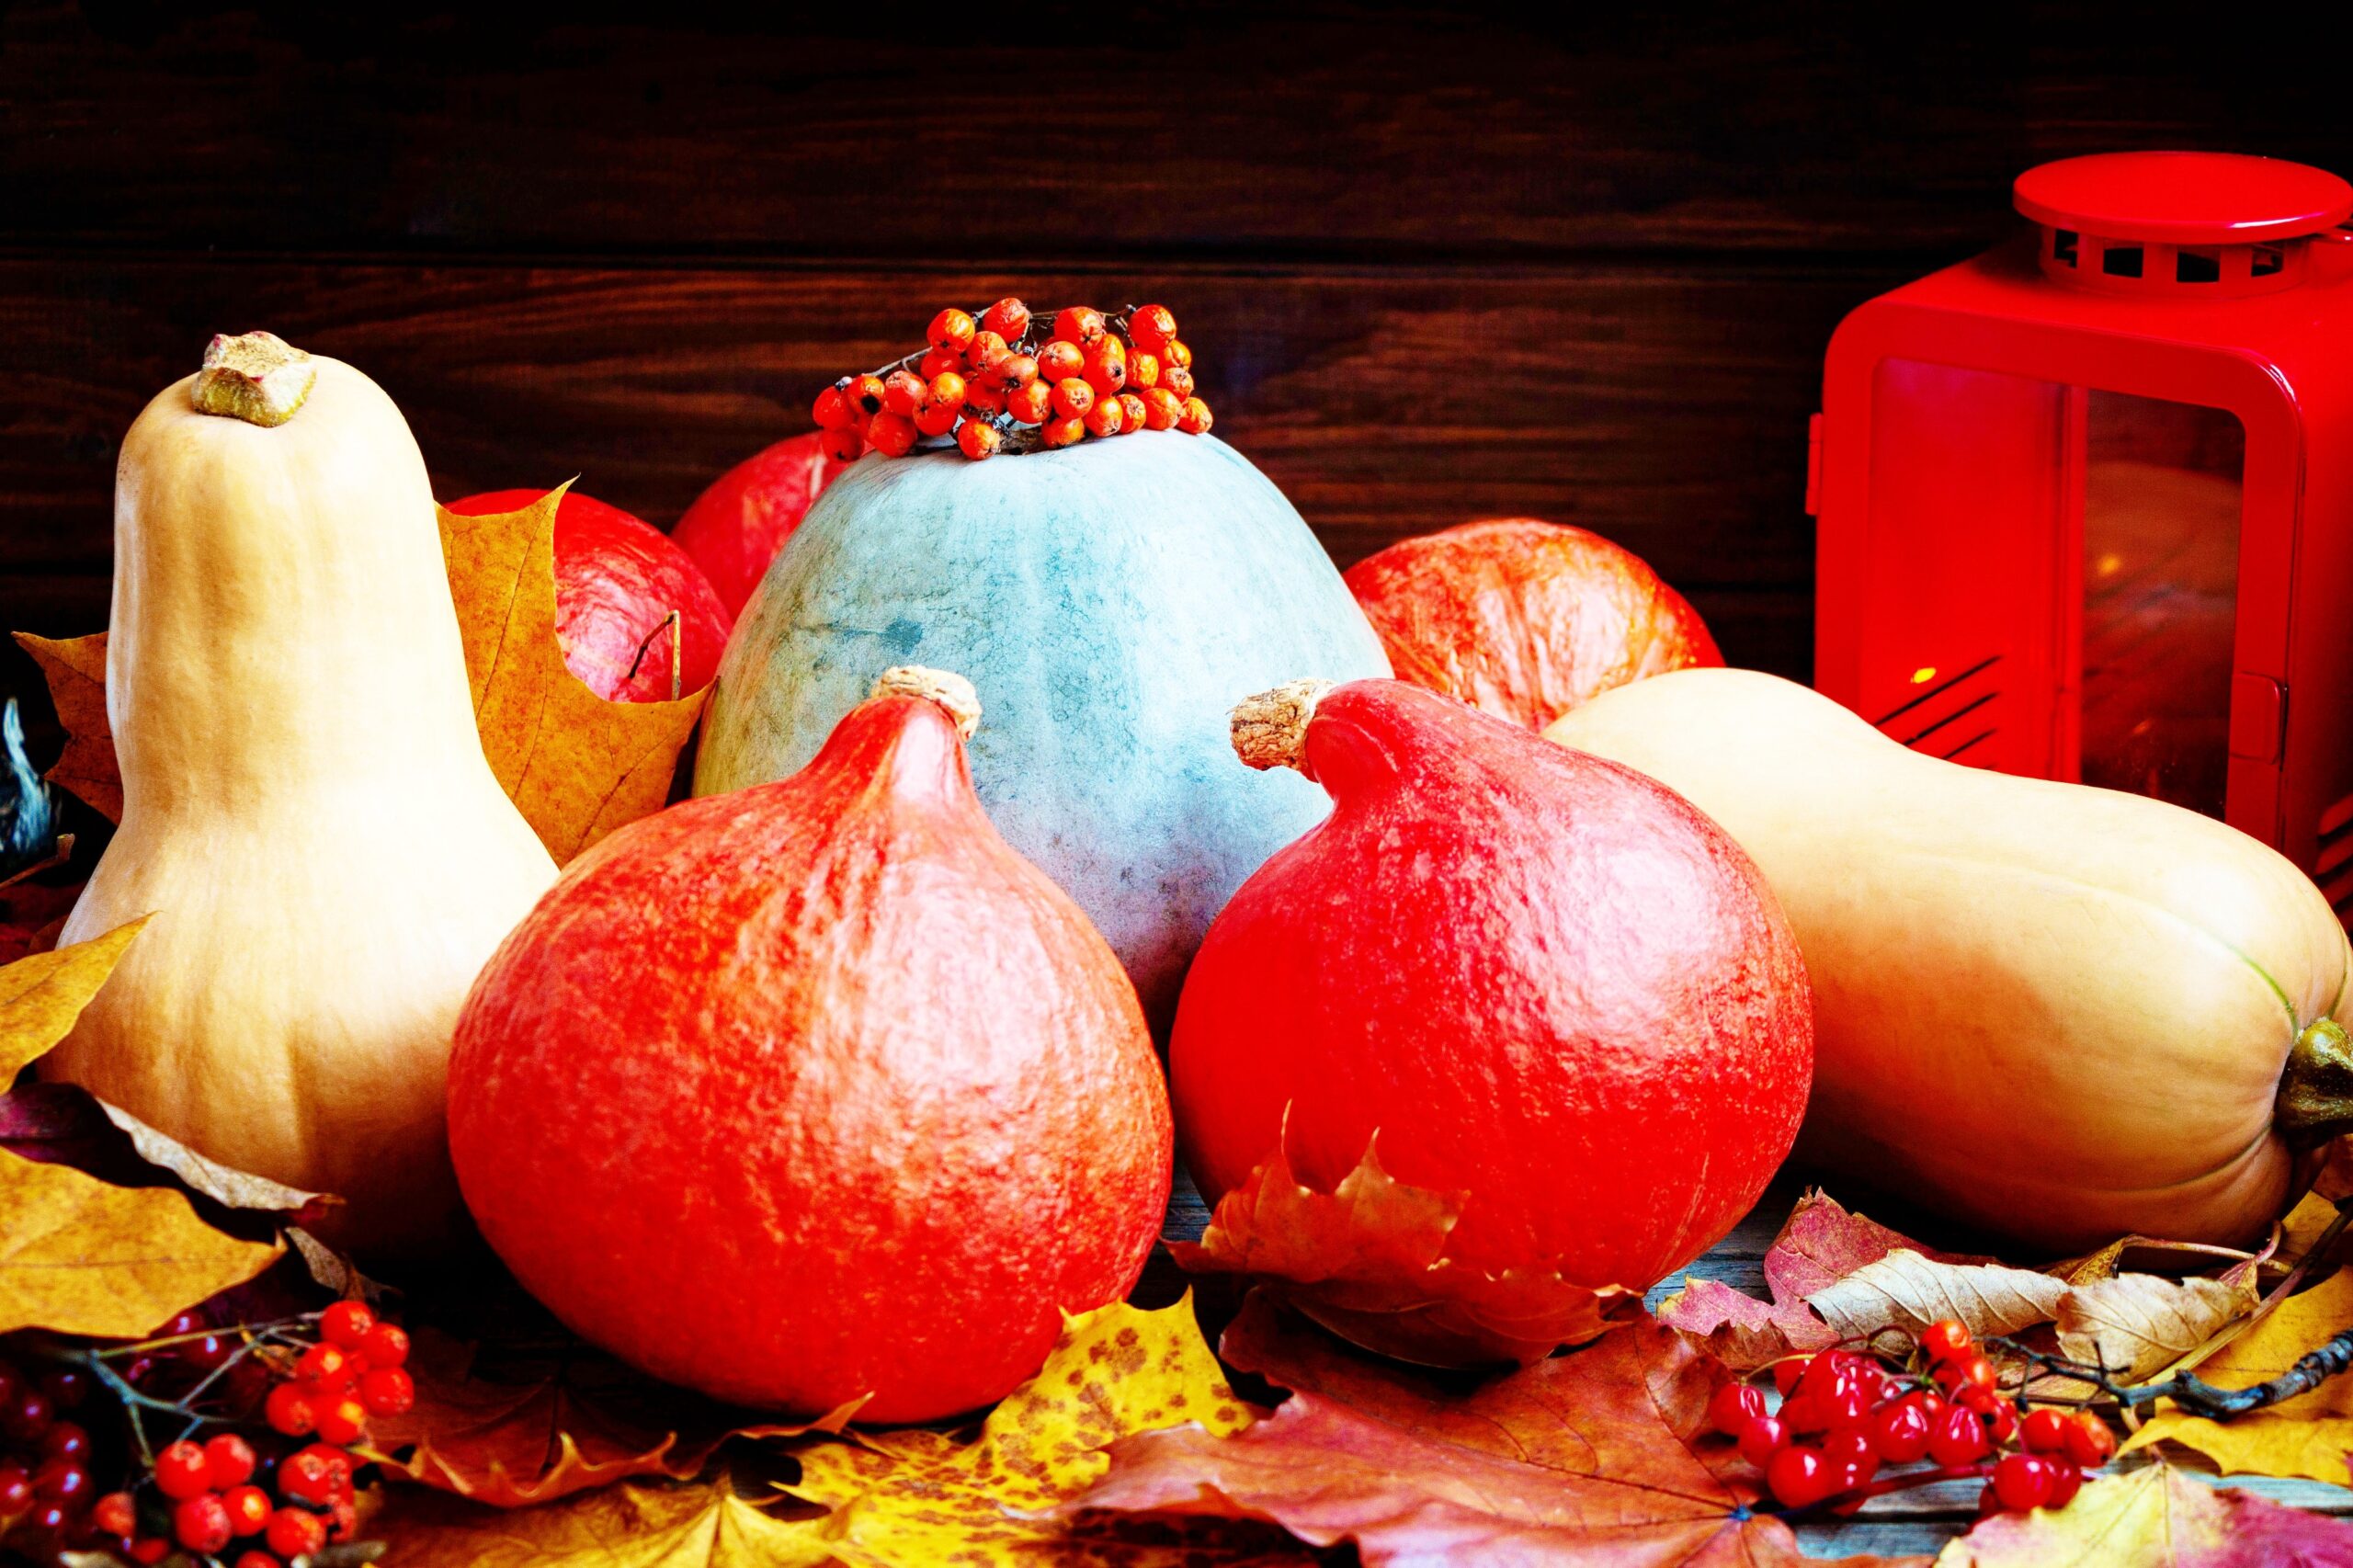 <img src="colourful.jpg" alt="colourful qurky pumpkins with firethorn"/>